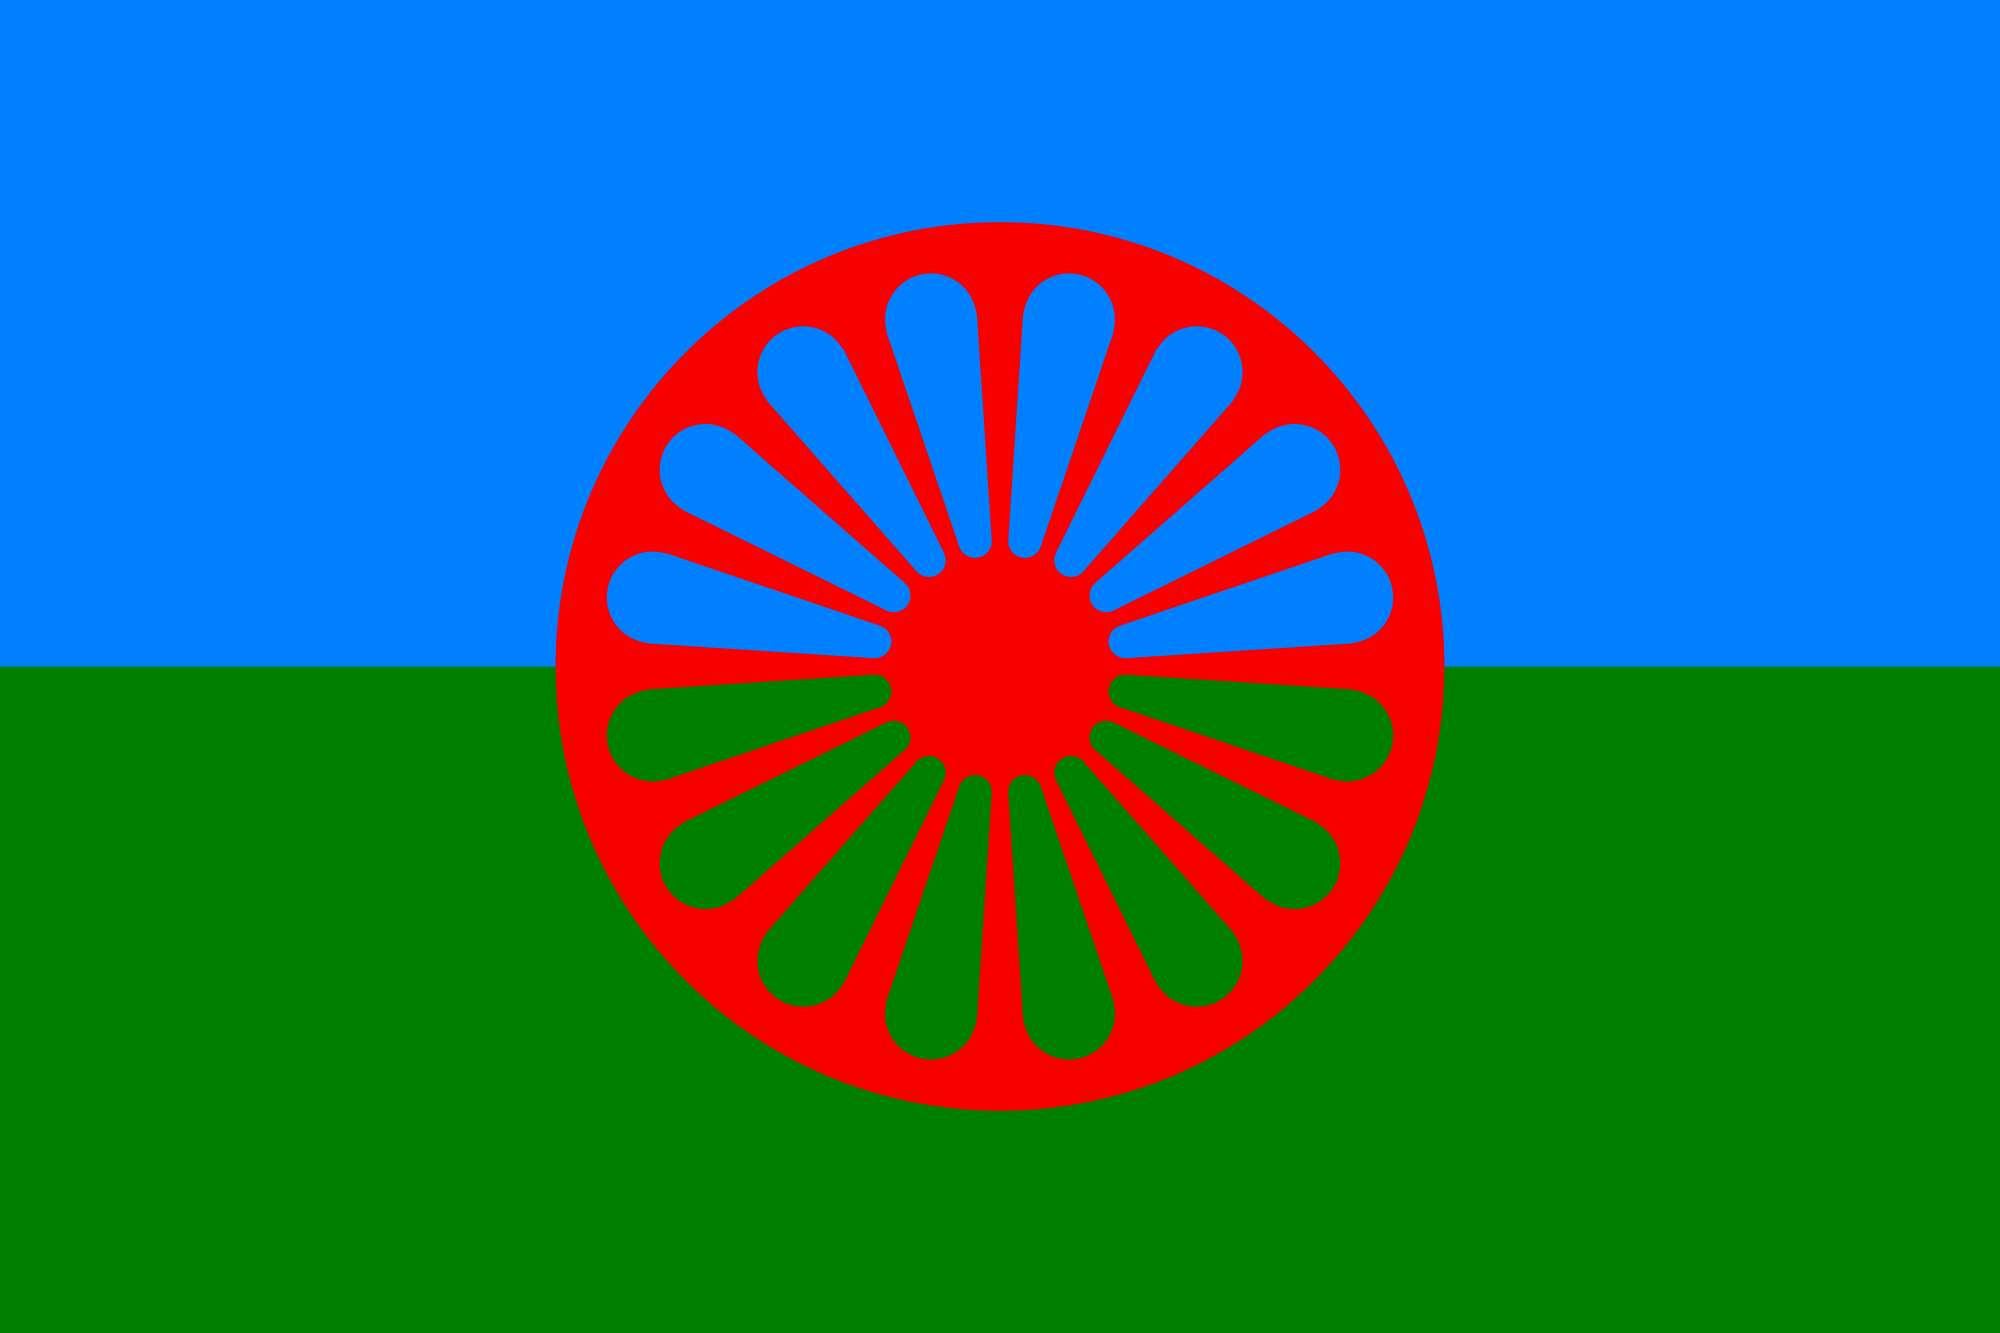 Romani-flaggor